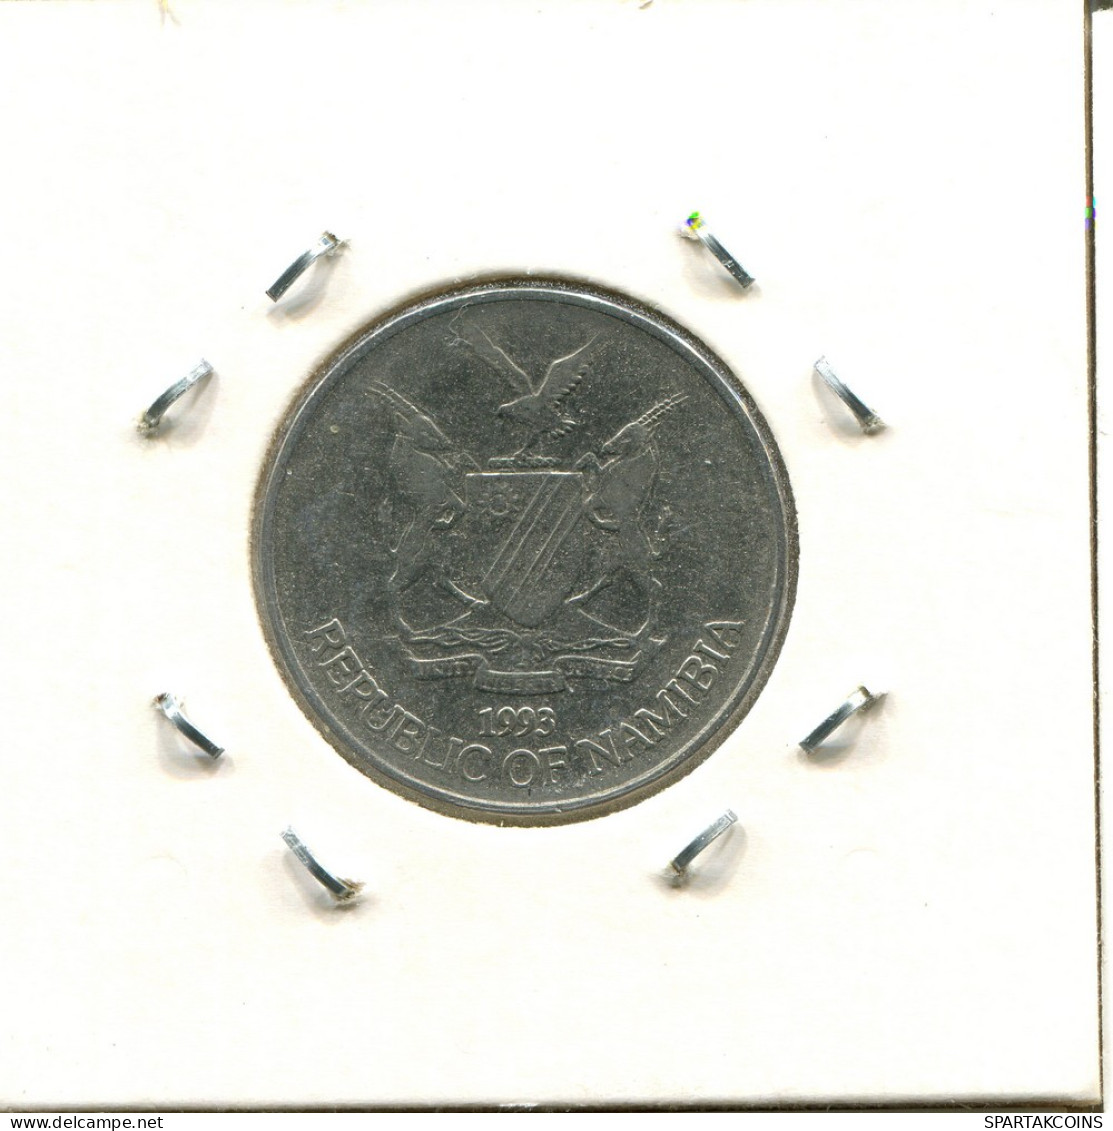 50 CENTS 1993 NAMIBIA Coin #AS396.U - Namibië